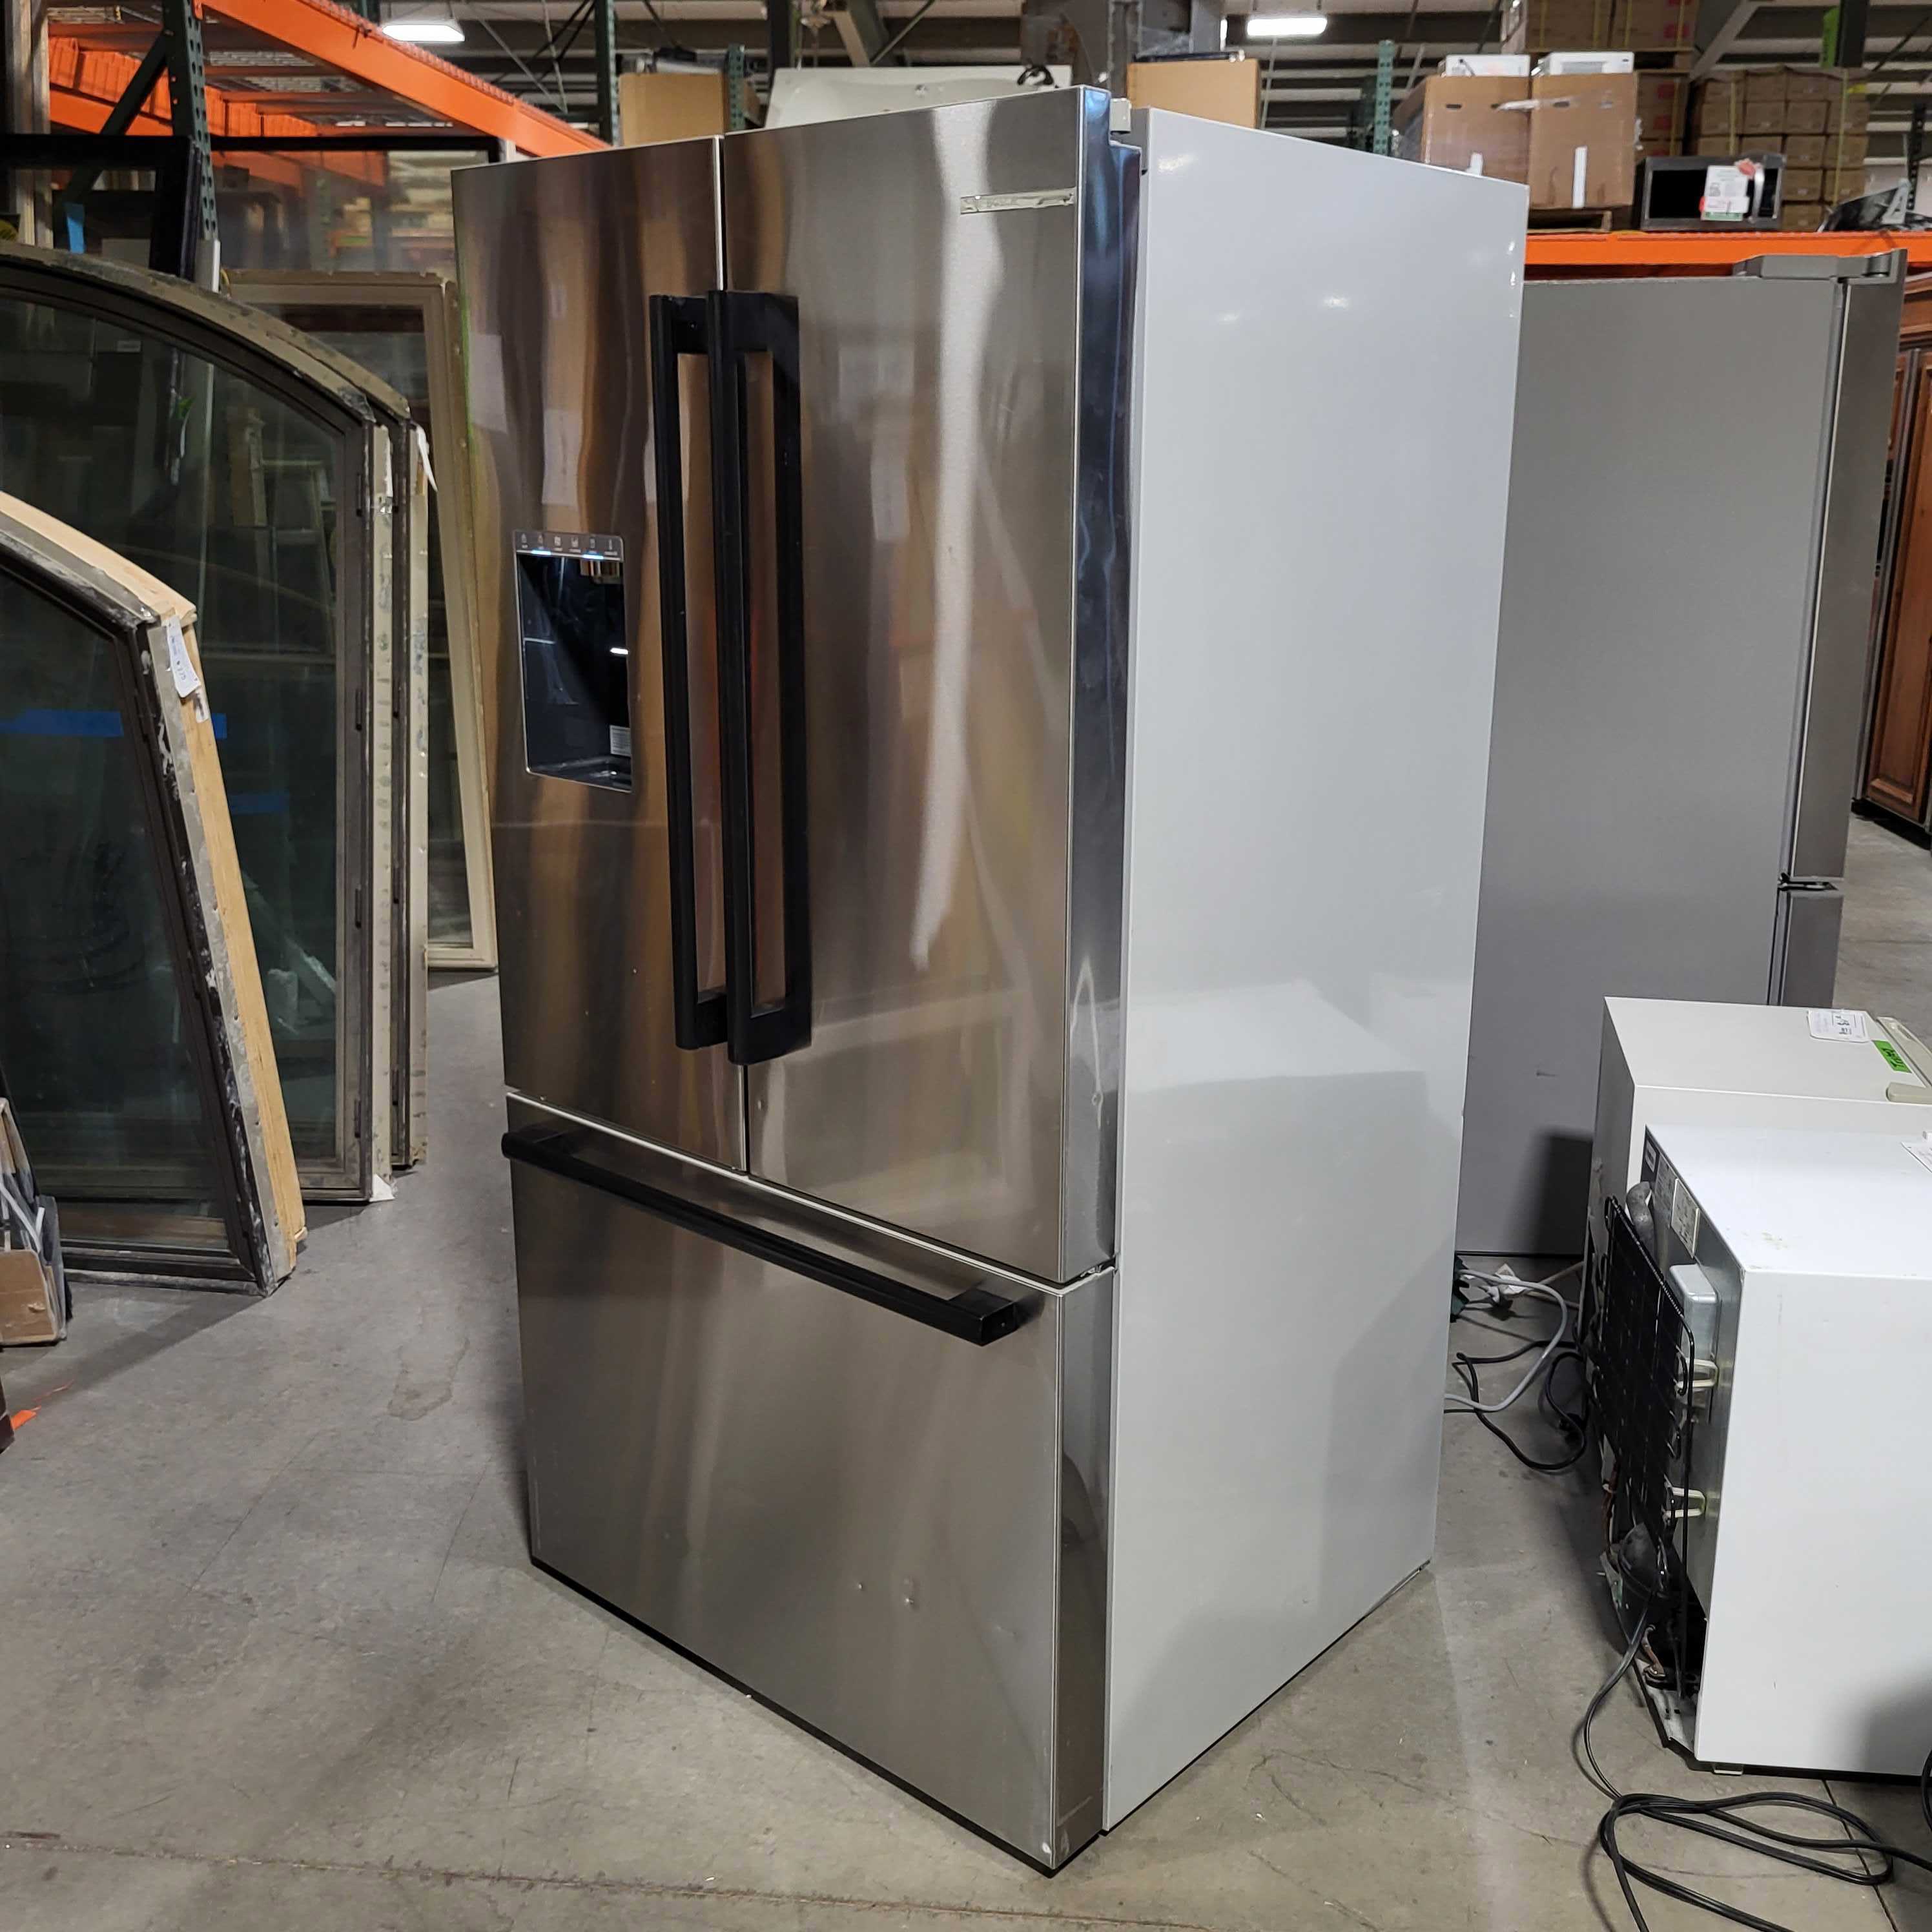 F4923 Bosch Stainless Steel French Doors Bottom Freezer Refrigerator